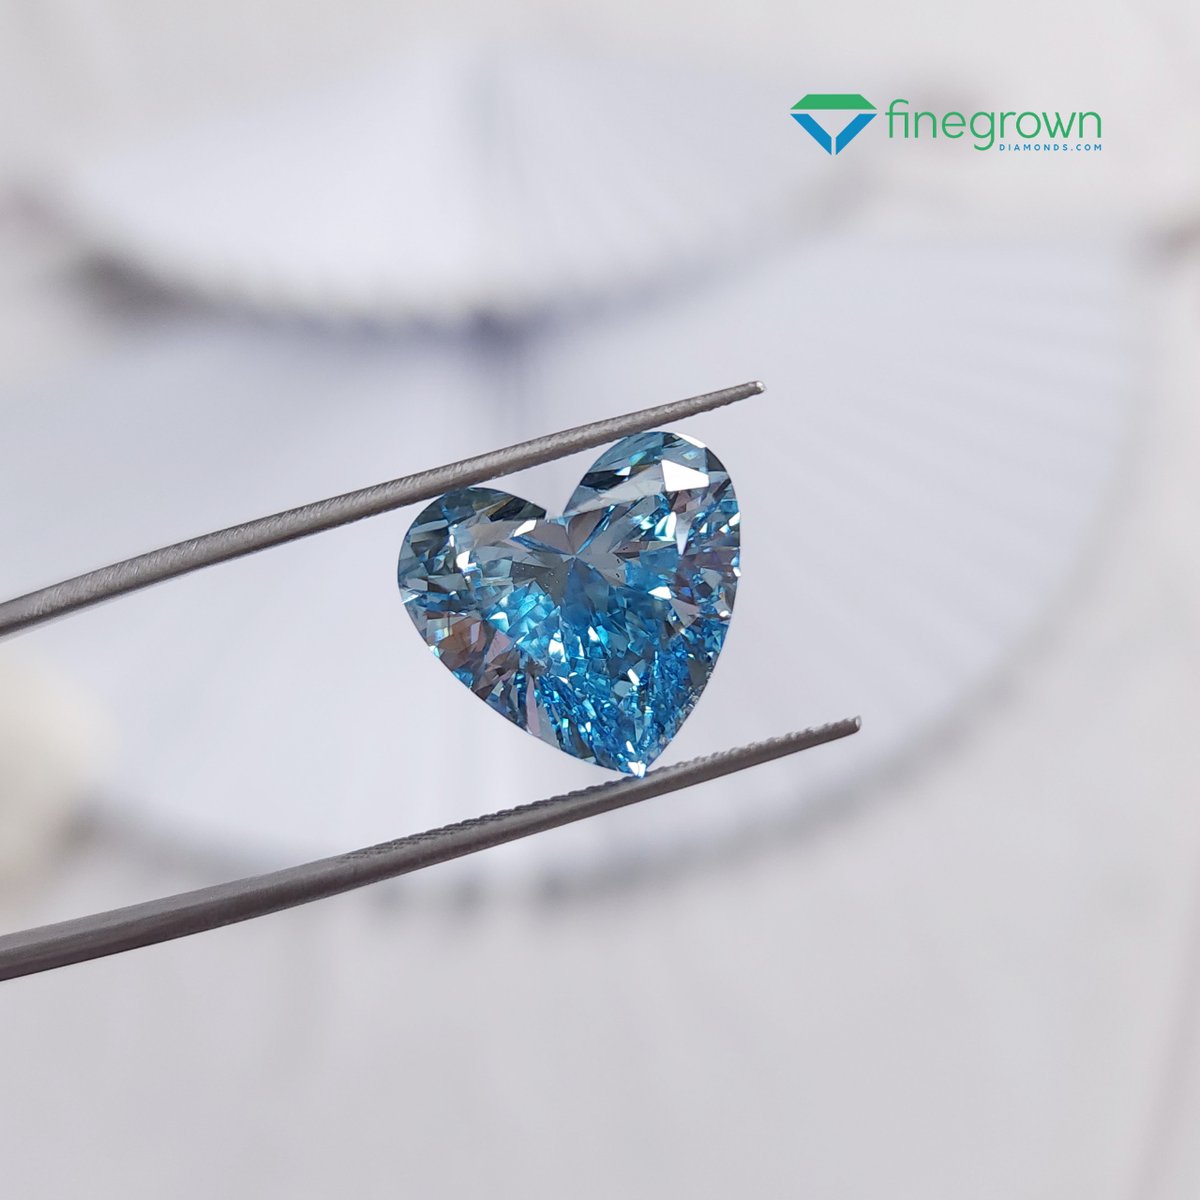 💙✨ Discover the allure of our Vivid blue Heart Shape Lab Diamond! 💎

#BlueDiamond #HeartShape #ShineBright #StatementPiece #UniqueJewelry #InstaFashion #DiamondLove #StyleInspiration #DreamJewels #MustHave #FashionForward #LoveAtFirstSight #finegrowndiamonds